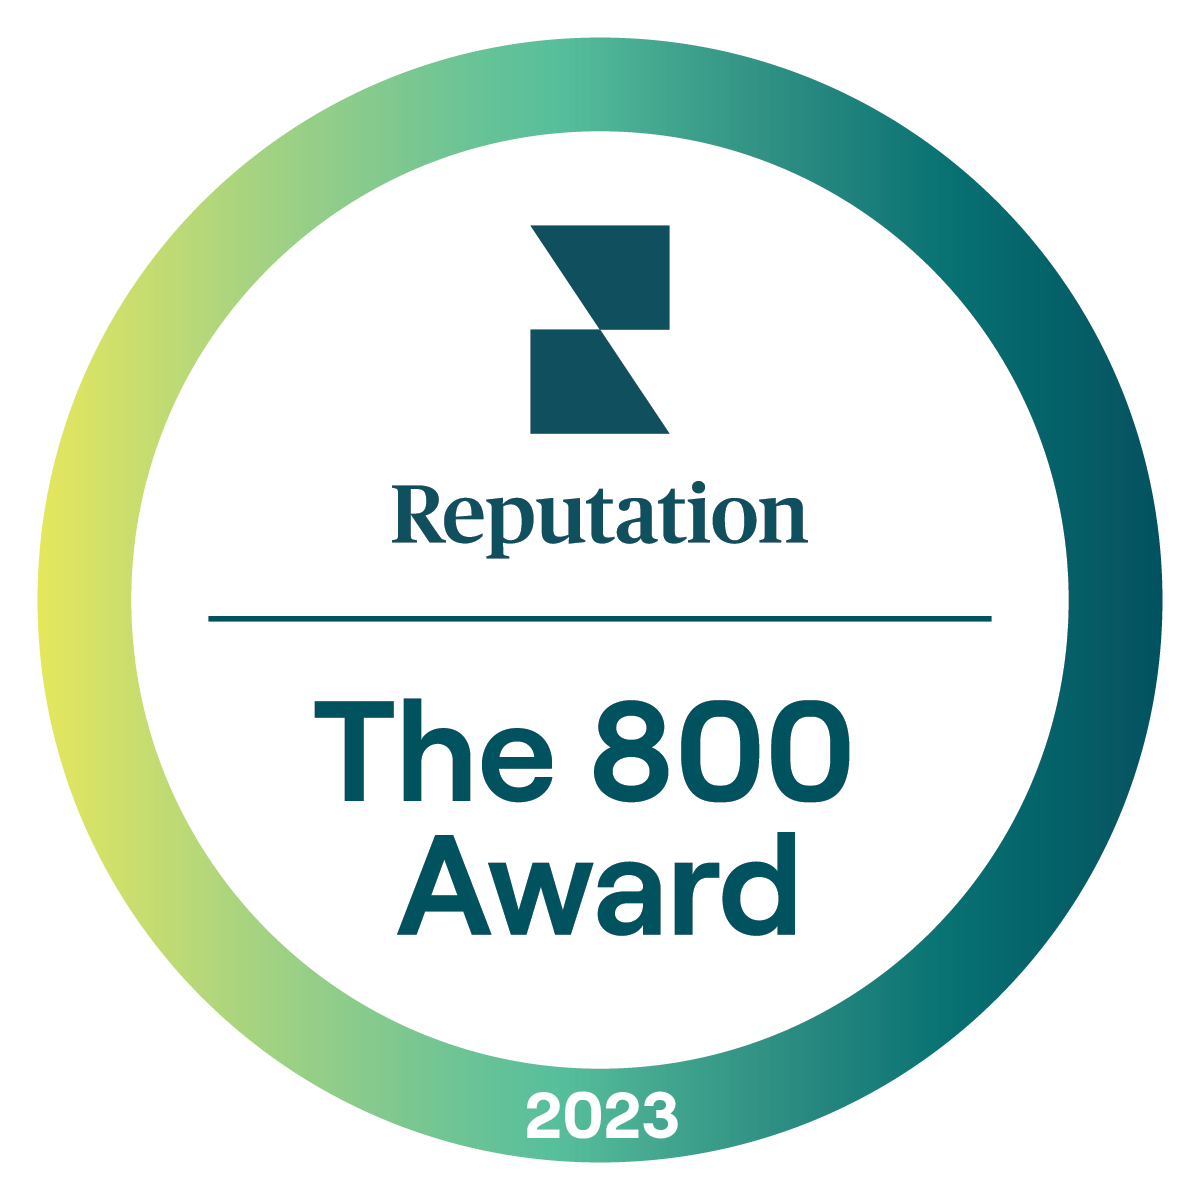 800 Award Reputation 